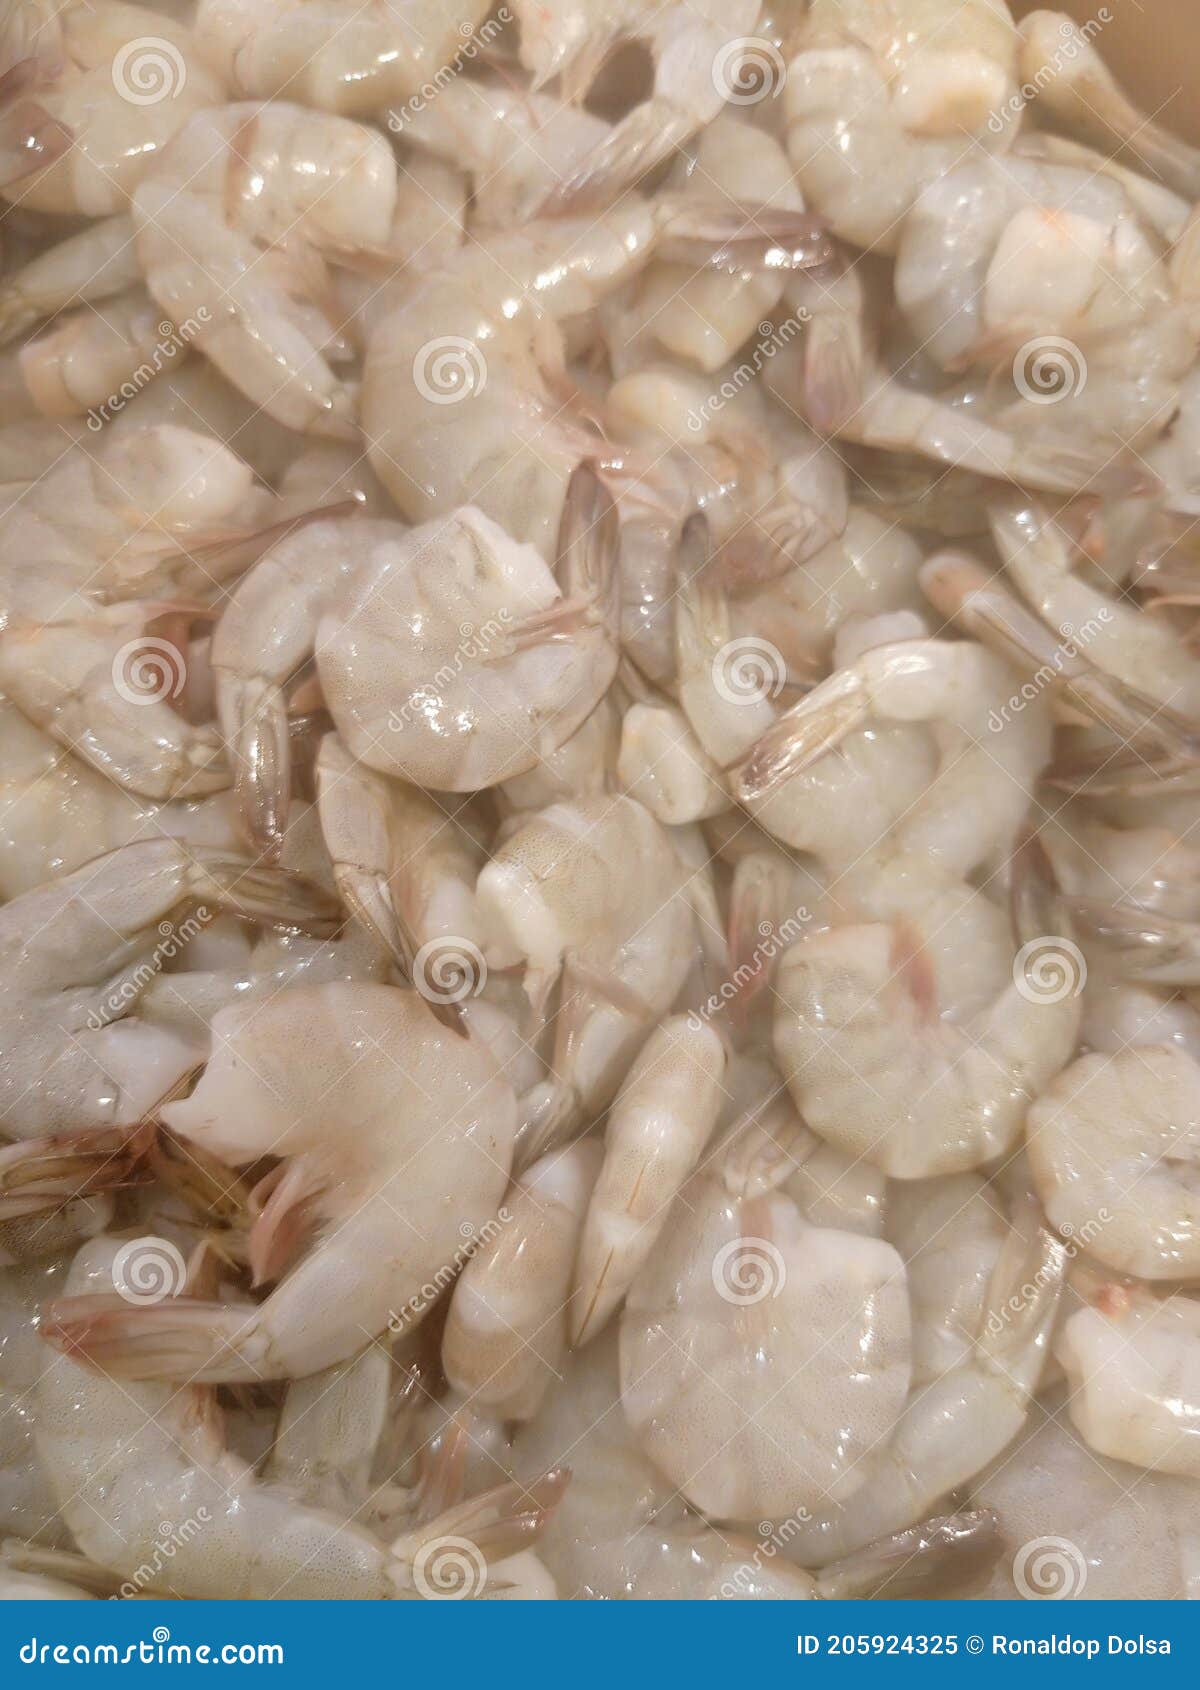 the fresh alot of shrimp sell in supermarket